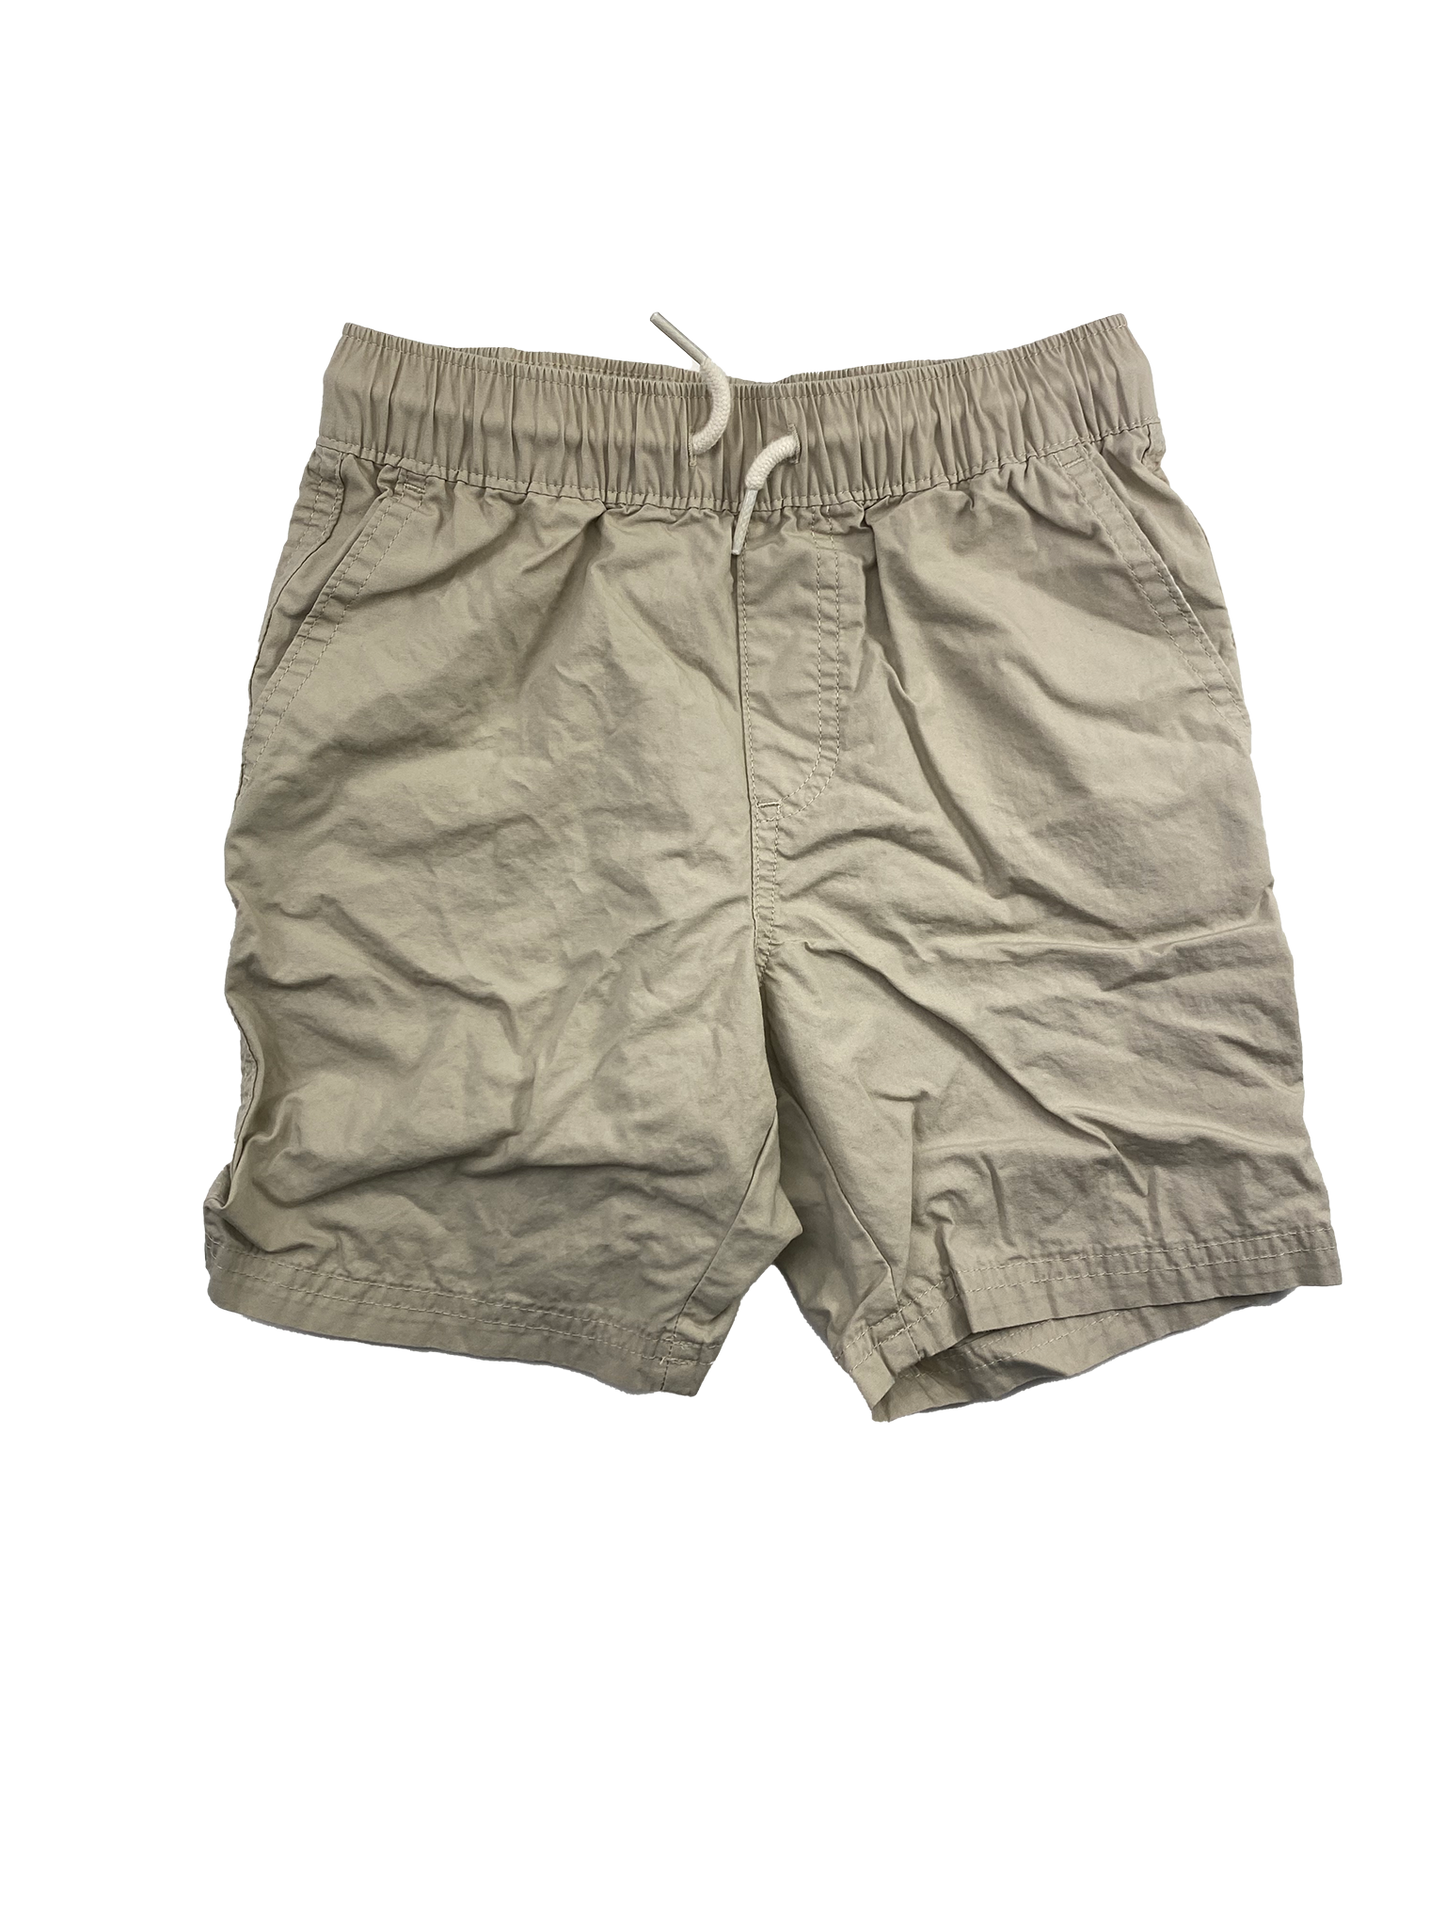 Old Navy Beige Shorts 5T